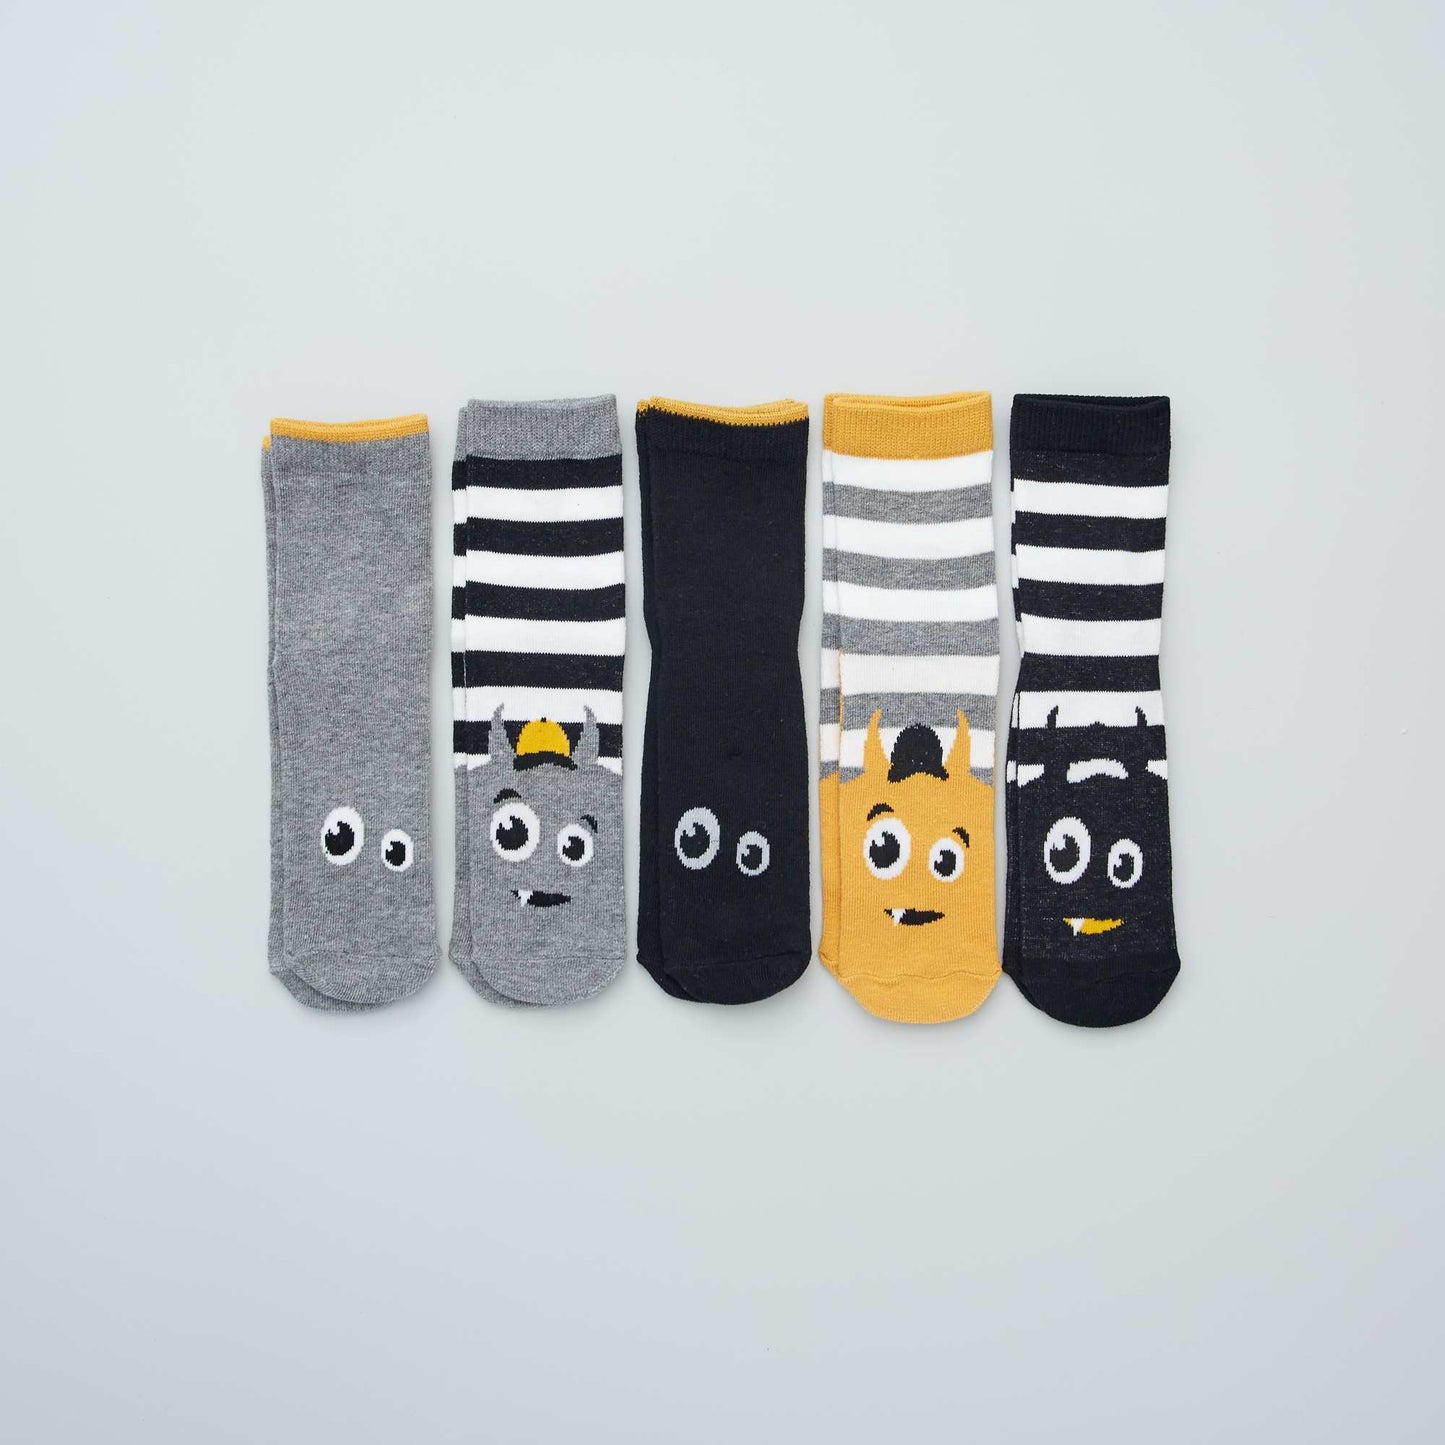 Pack of 5 pairs of printed socks YELLOW